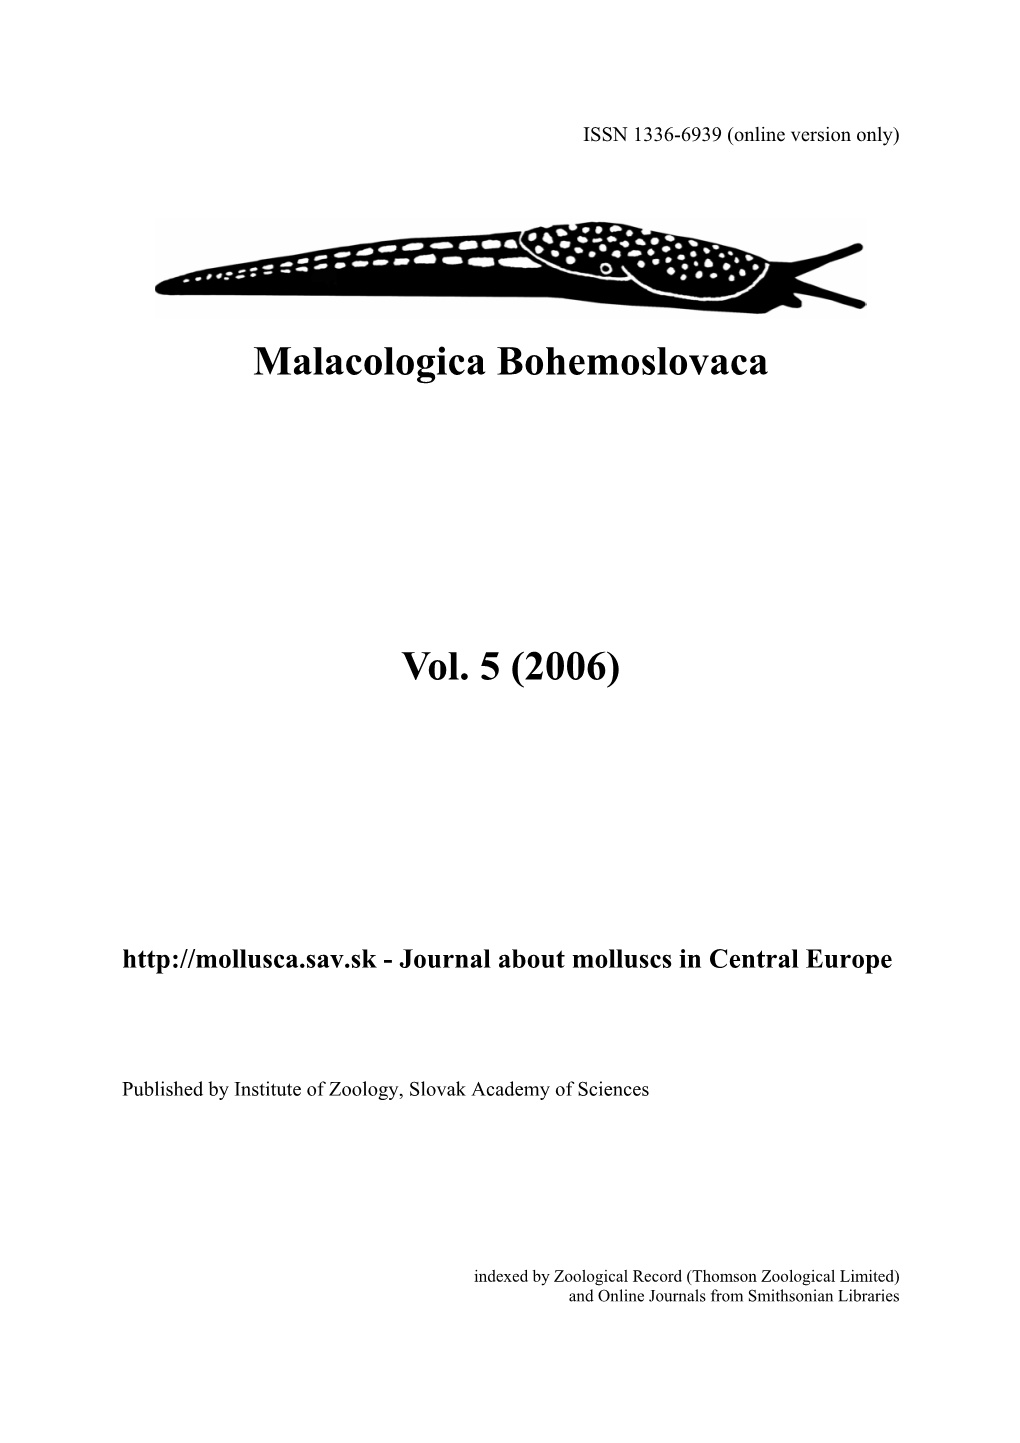 Malacologica Bohemoslovaca Vol. 5